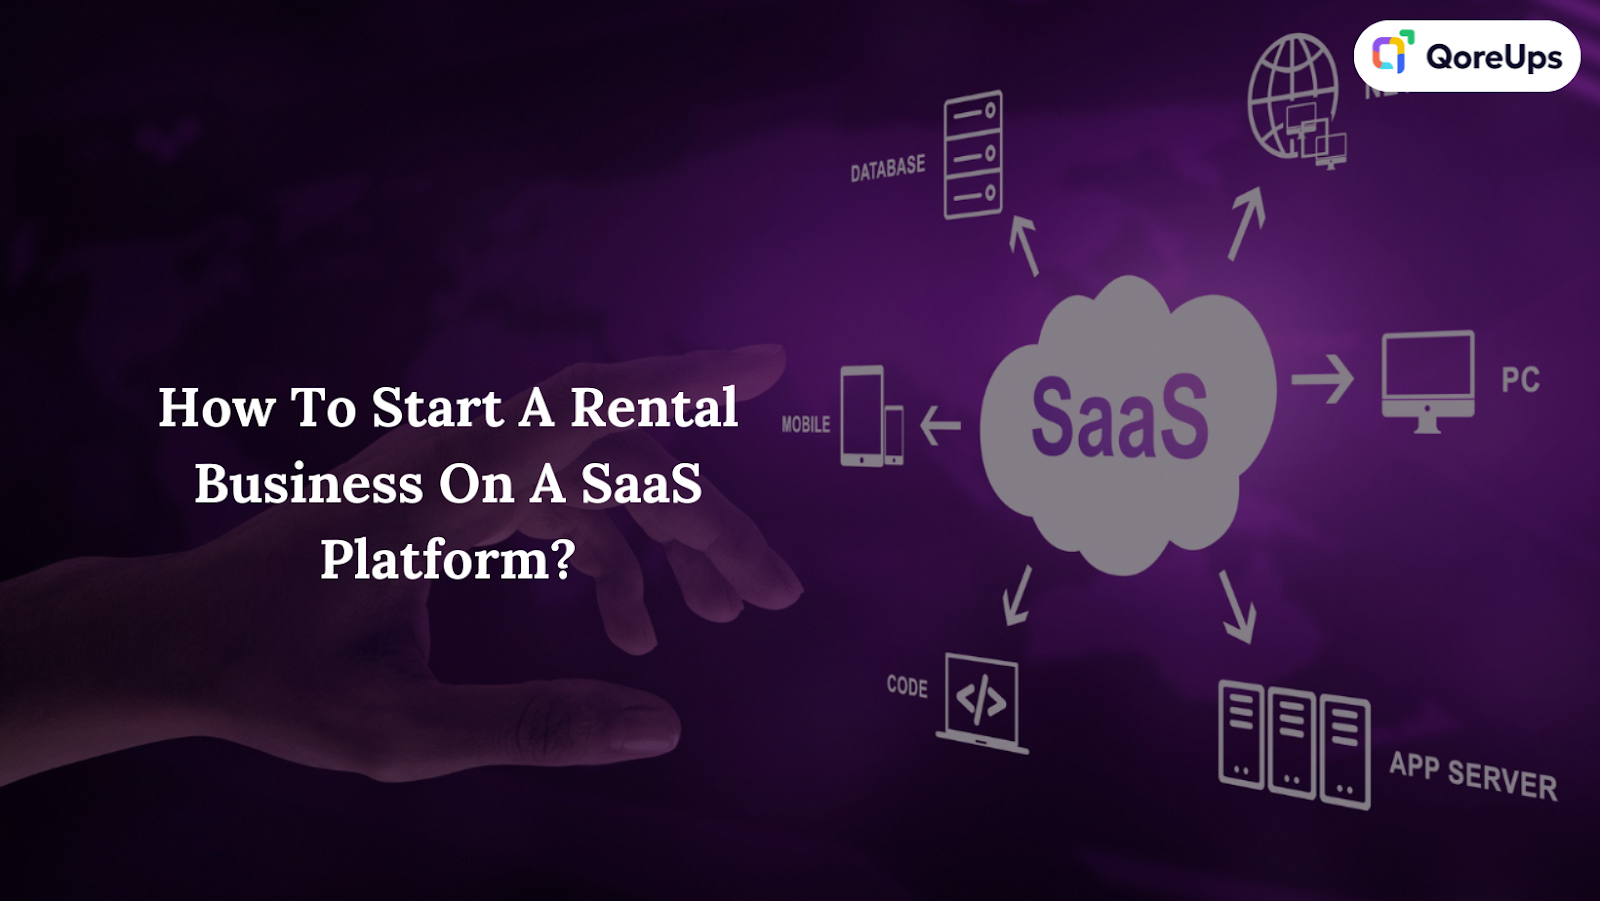 #How To Start A Rental Business On A SaaS Platform?